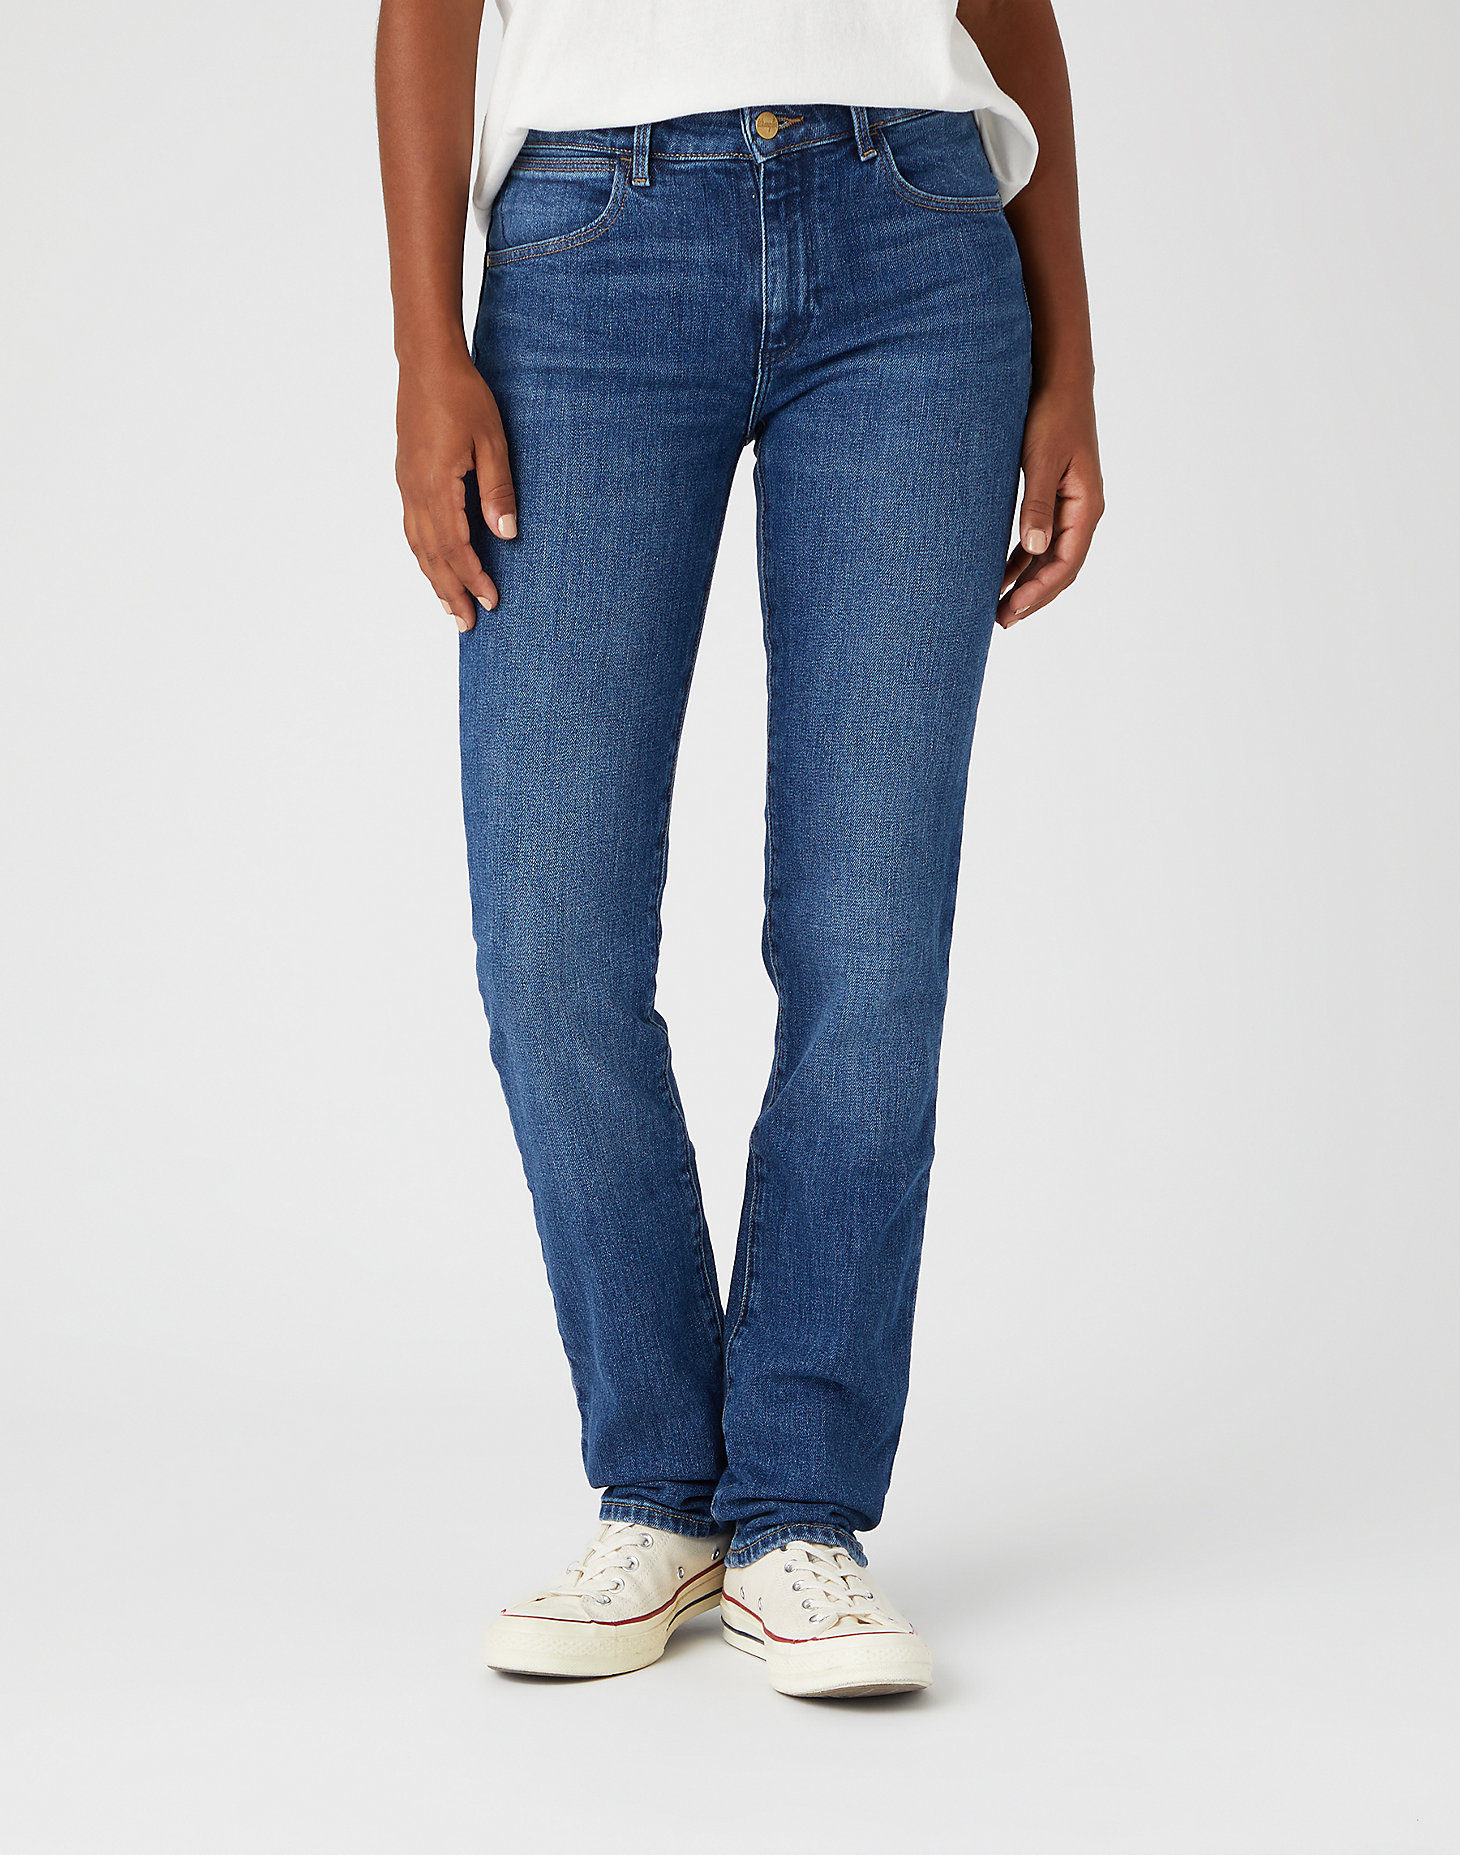 MEN FASHION Jeans Basic Kiabi straight jeans discount 96% Green 44                  EU 